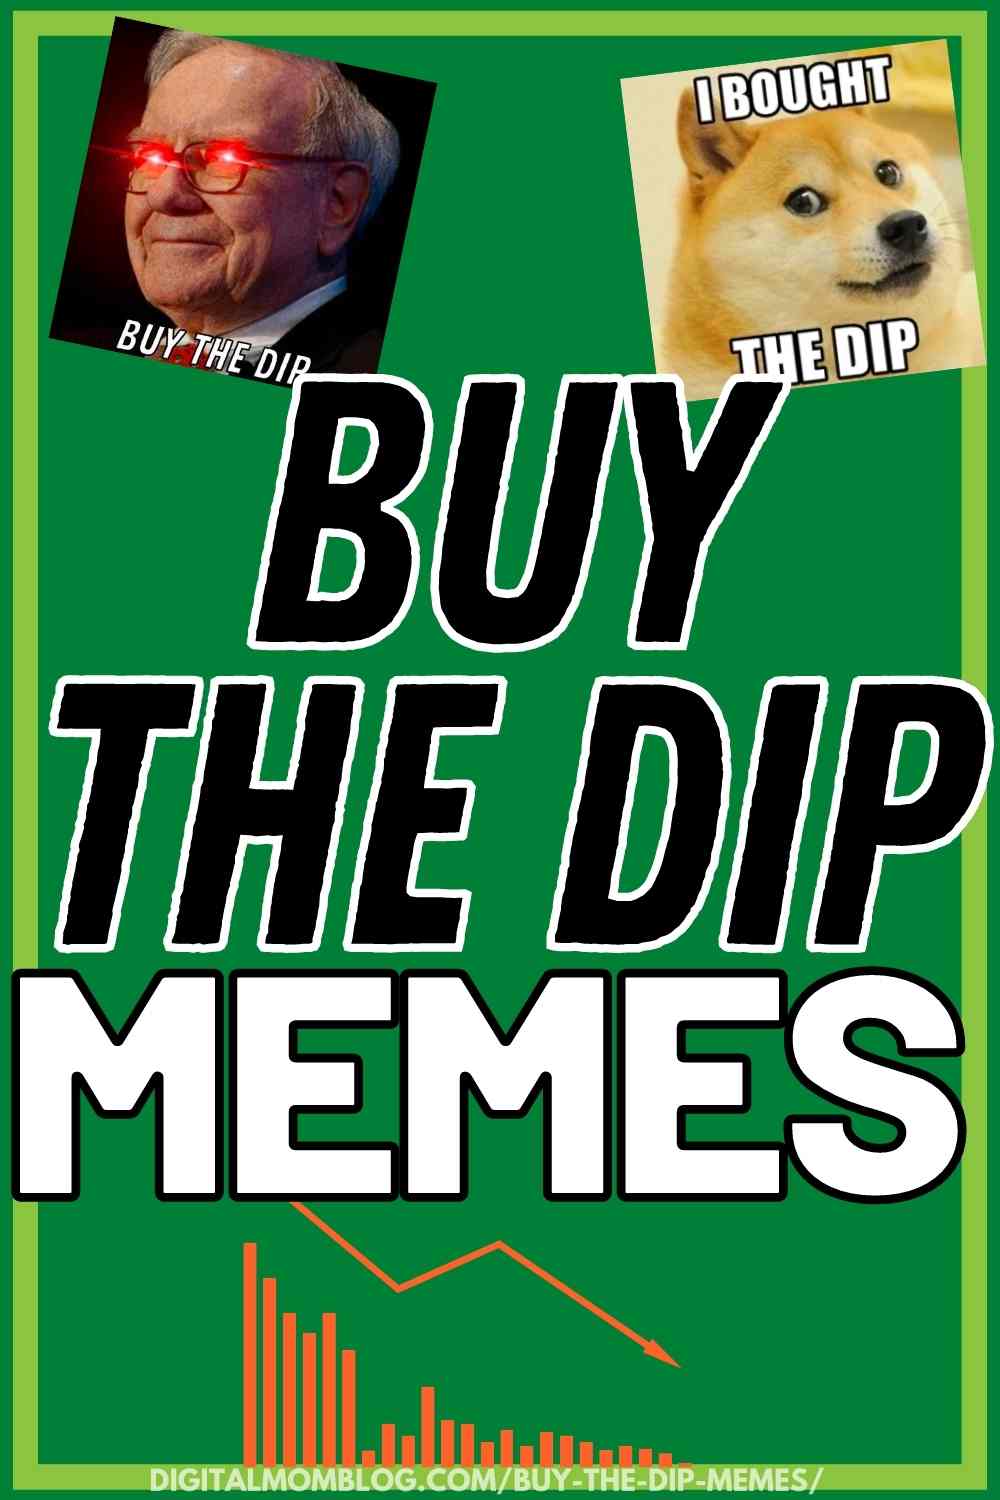 When buying the dip isn't good enough